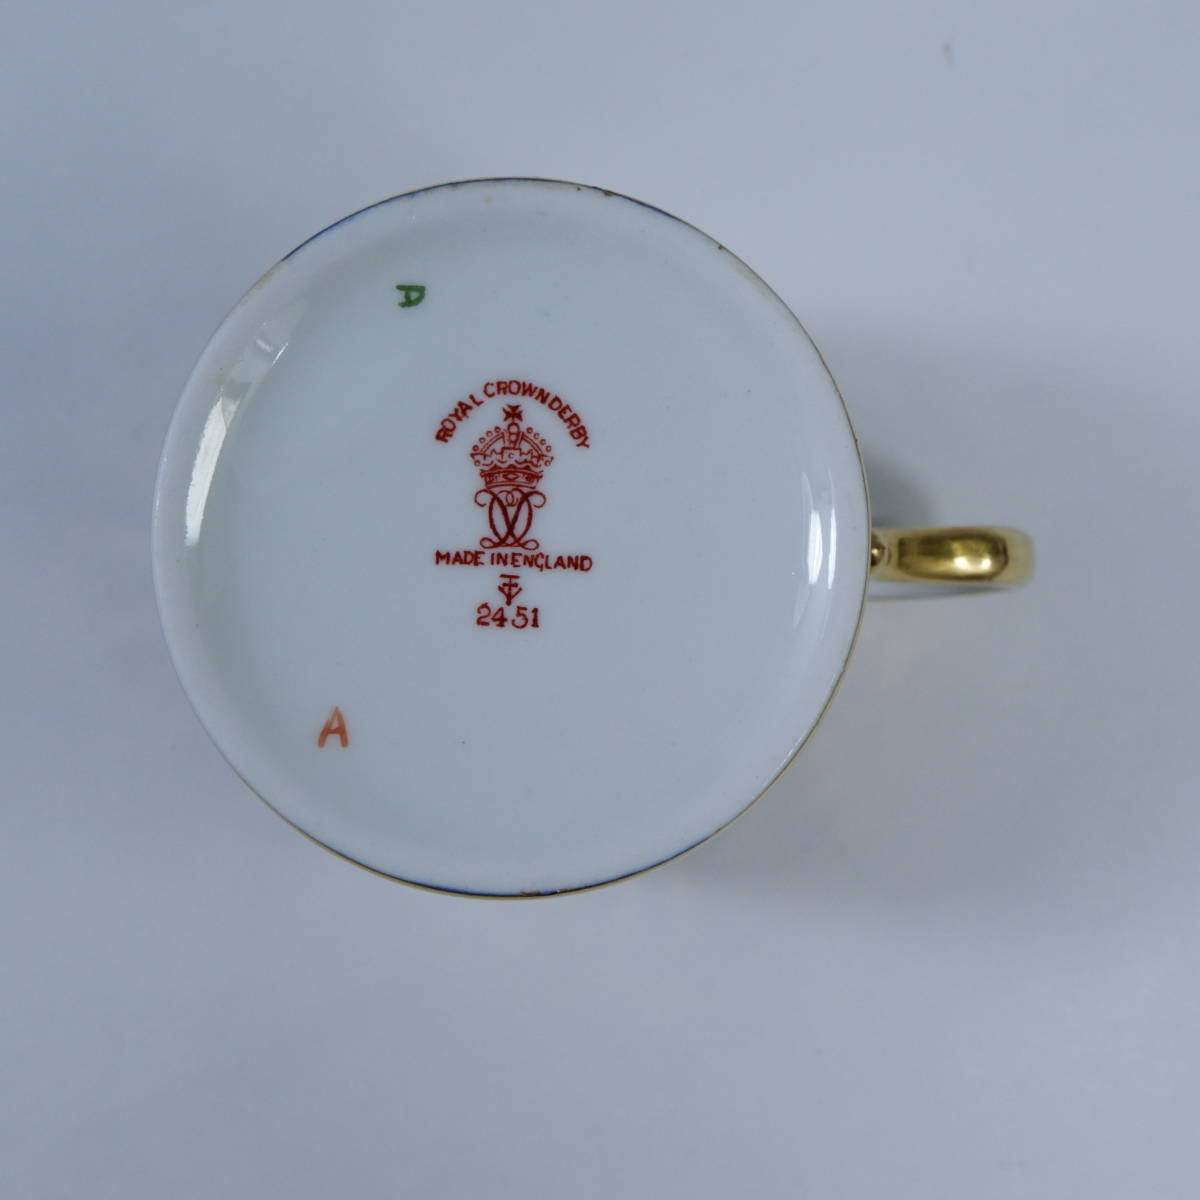  Royal Crown Dubey i Мали маленькая чашка & блюдце 1935 год производства 2451 IMARI Imari 